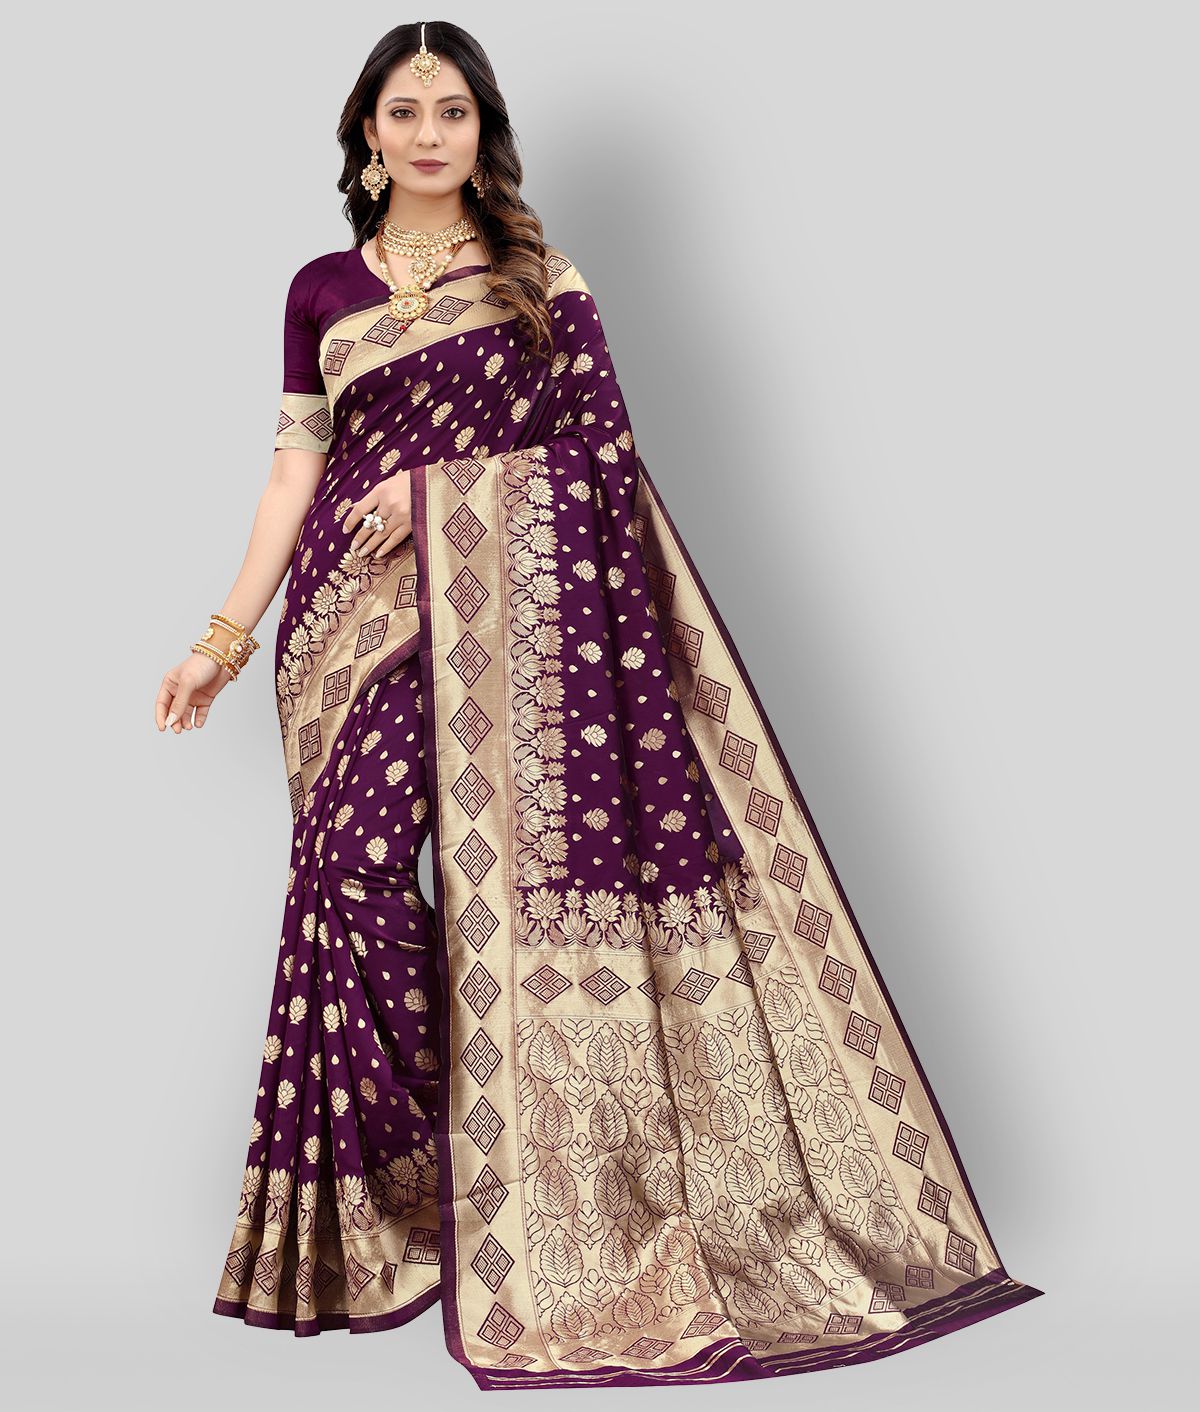     			NENCY FASHION - Maroon Banarasi Silk Saree With Stitched Blouse ( Pack of 1 )